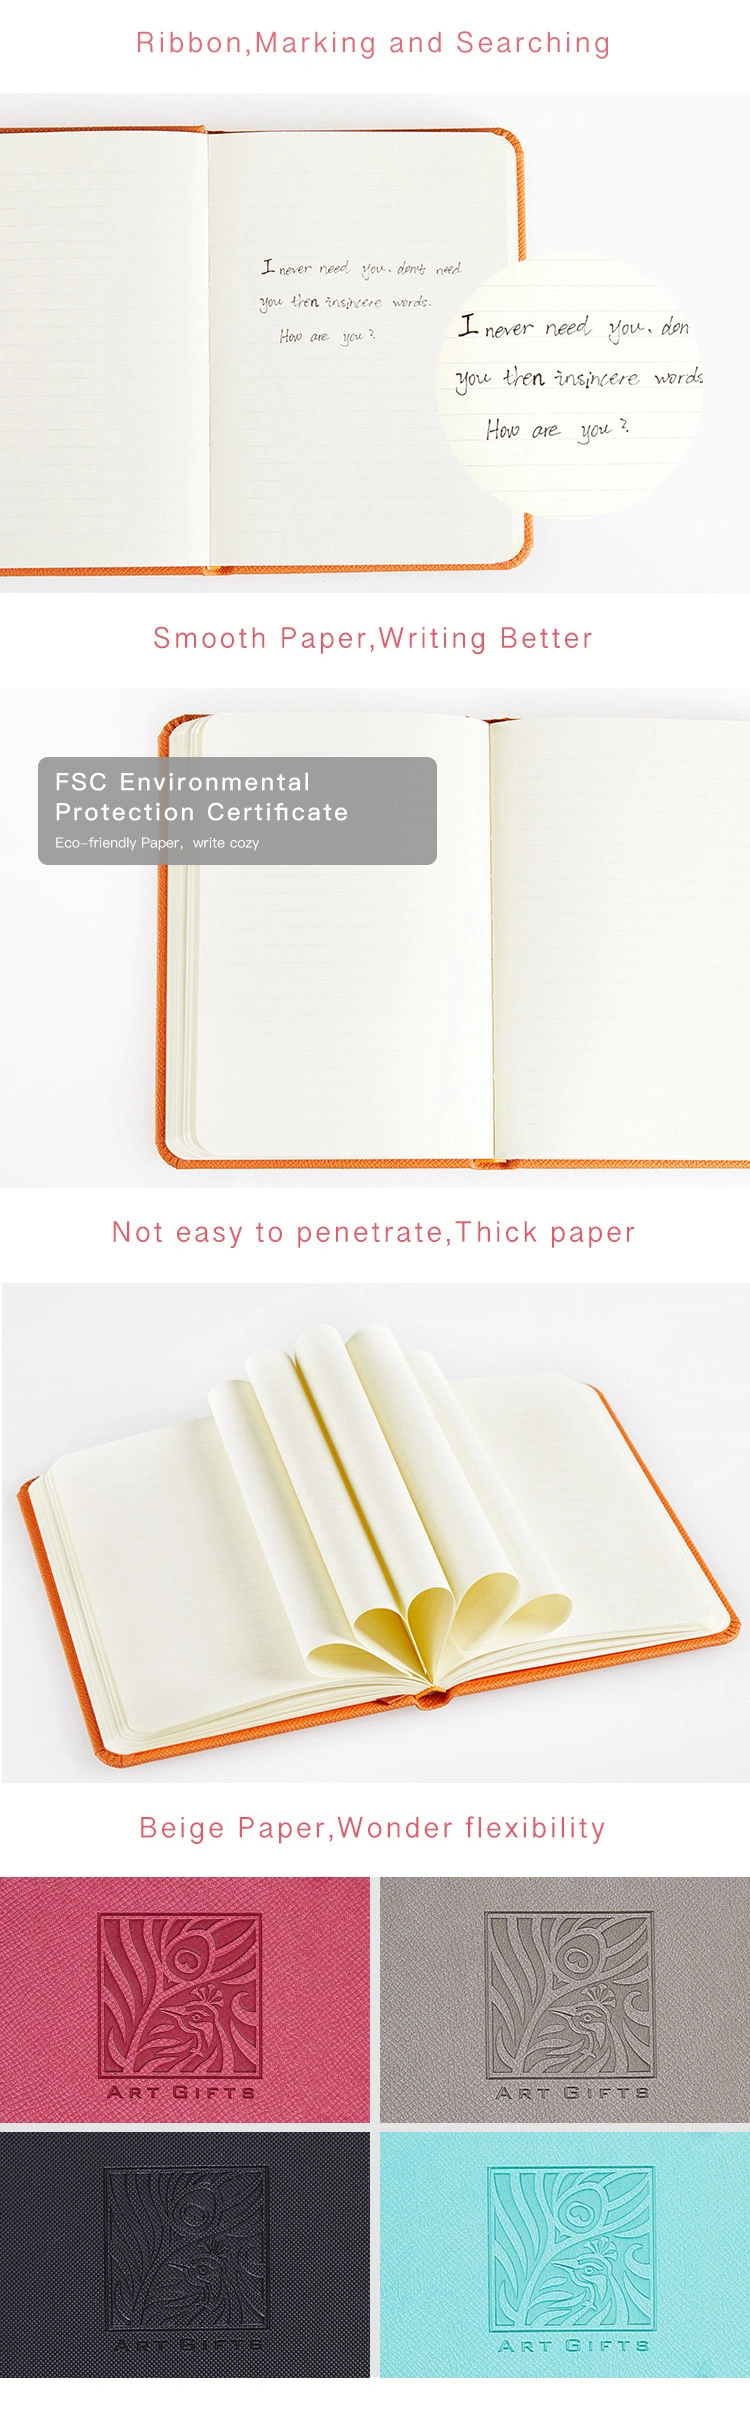 Custom Elastic Band PU Leather Writing Journal Small Notebook (113mm*172mm)